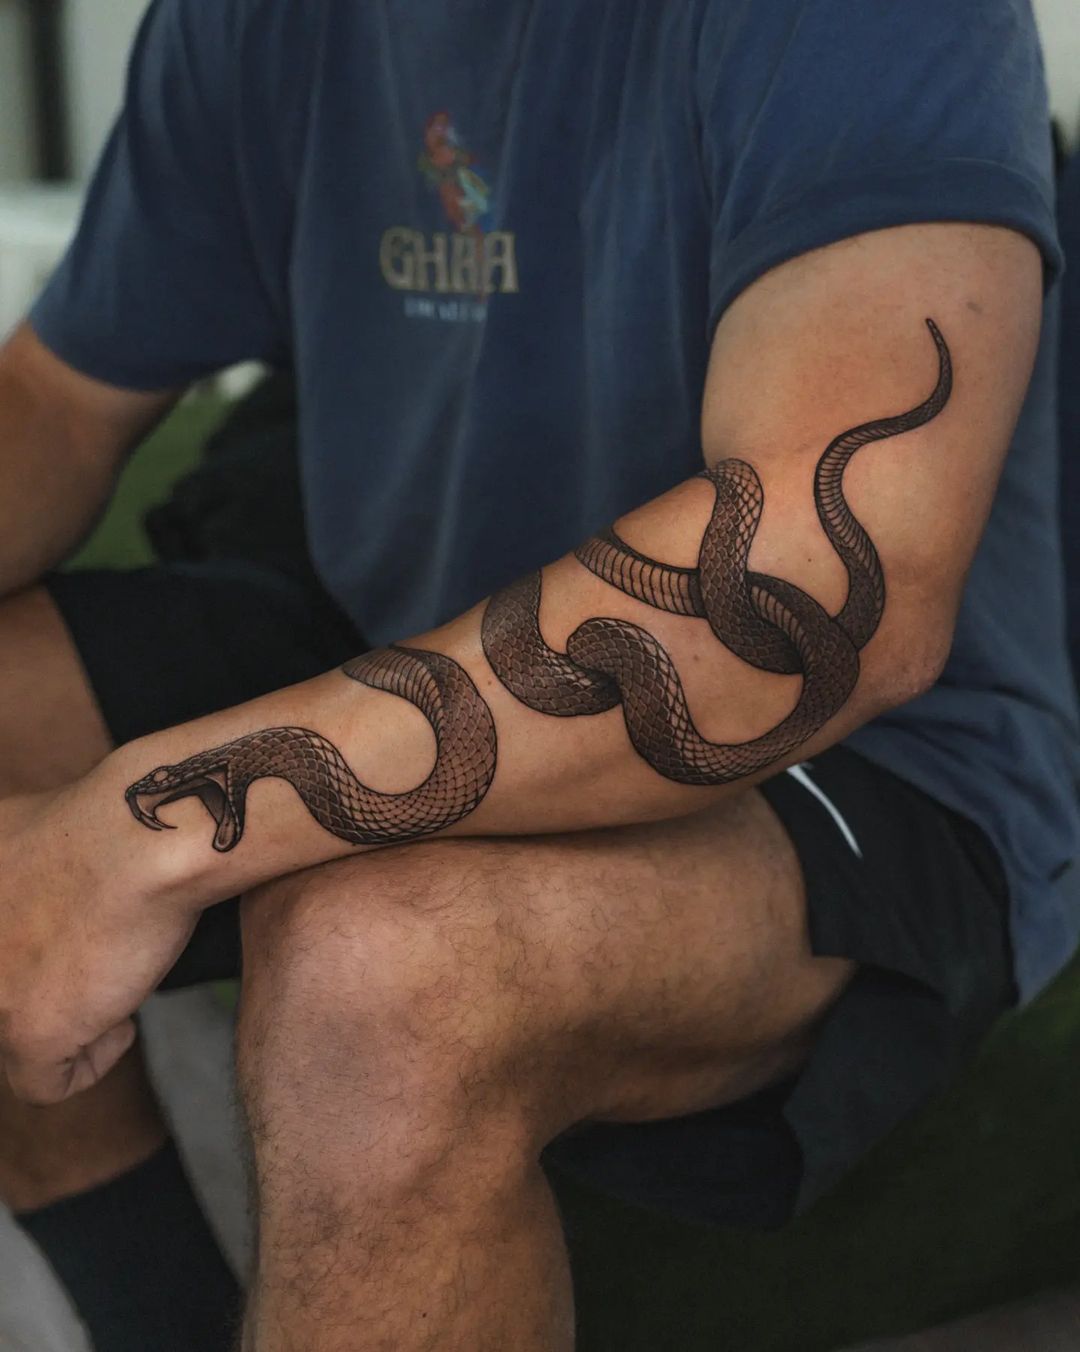 Amazing sanke tattoo on arm by koonoblk